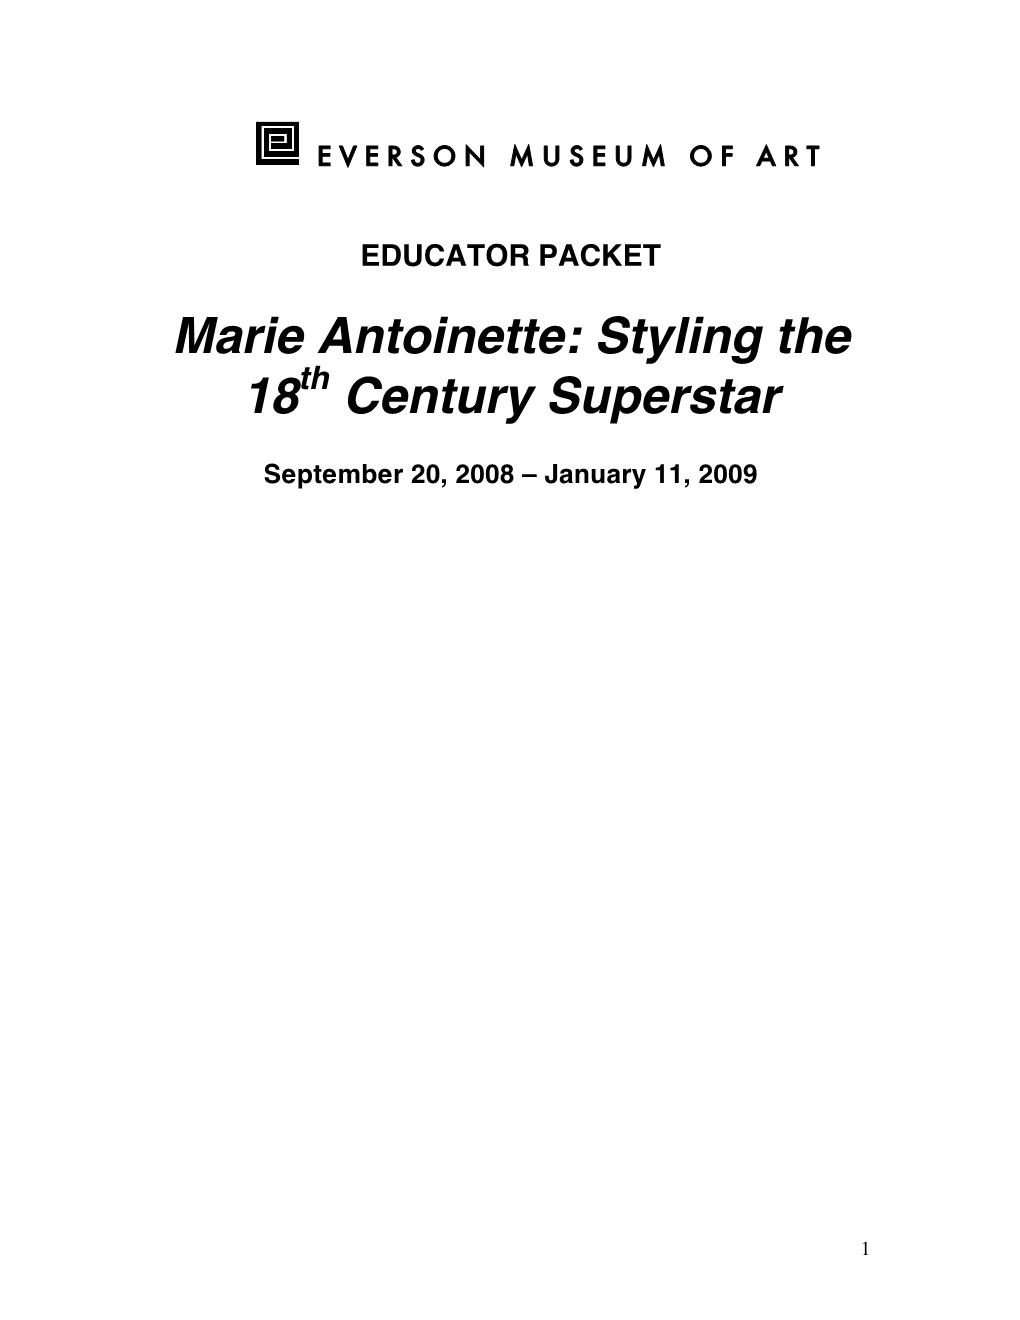 Marie Antoinette: Styling the 18 Century Superstar